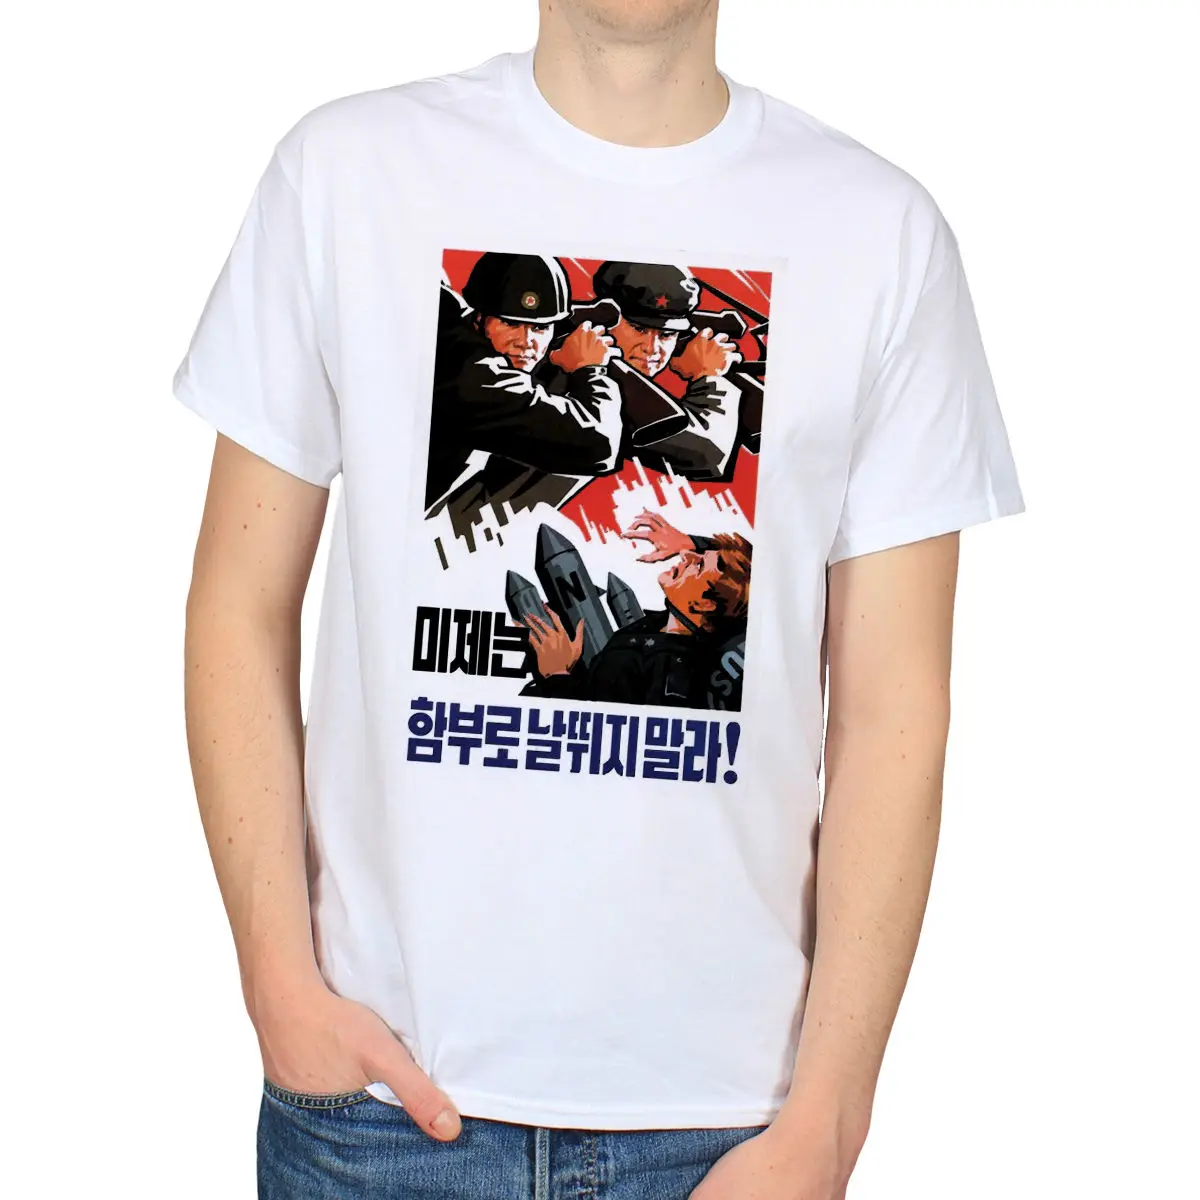 

2019 Summer Cool Tee Shirt NORTH KOREA PROPAGANDA POSTER POLITICAL ART COMMUNISM MENS WHITE T-SHIRT TEE Funny T-shirt